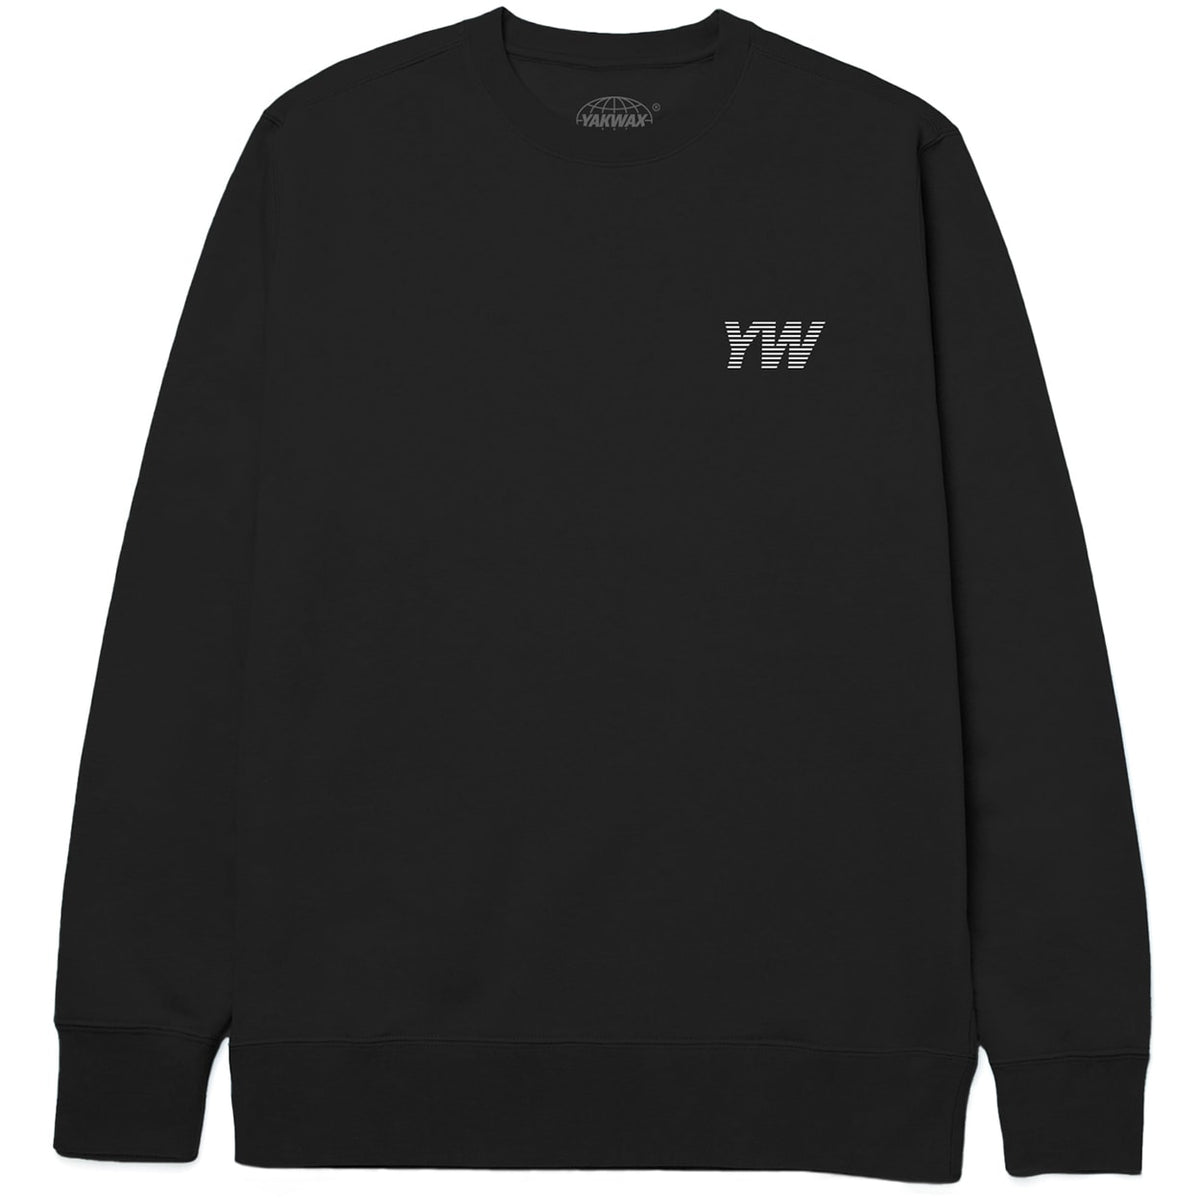 Yakwax Fundamentals Crewneck - Black - Mens Crew Neck Sweatshirt by Yakwax